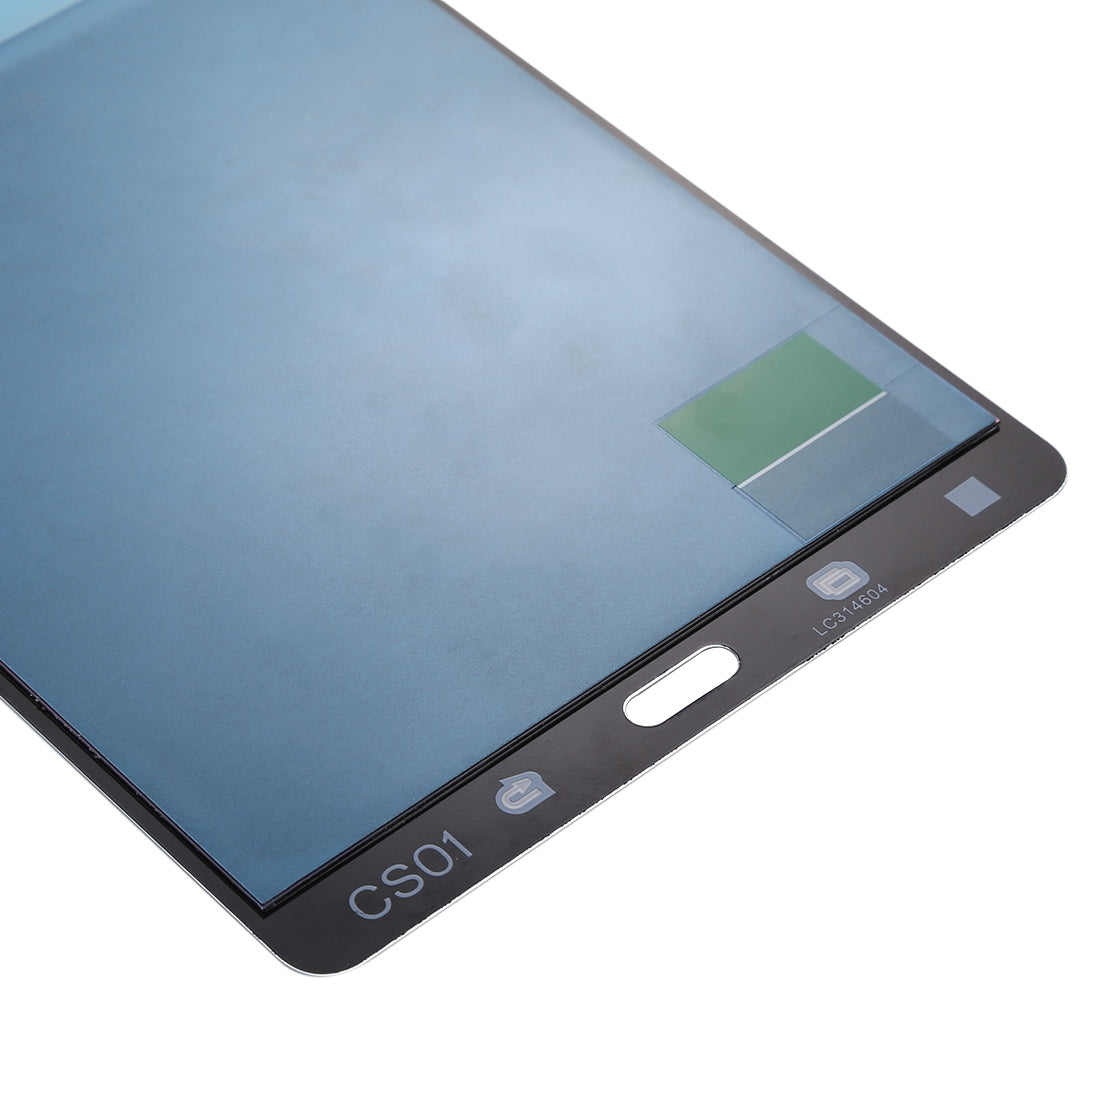 Pantalla LCD + Tactil Digitalizador Samsung Galaxy Tab S 8.4 LTE T705 Blanco